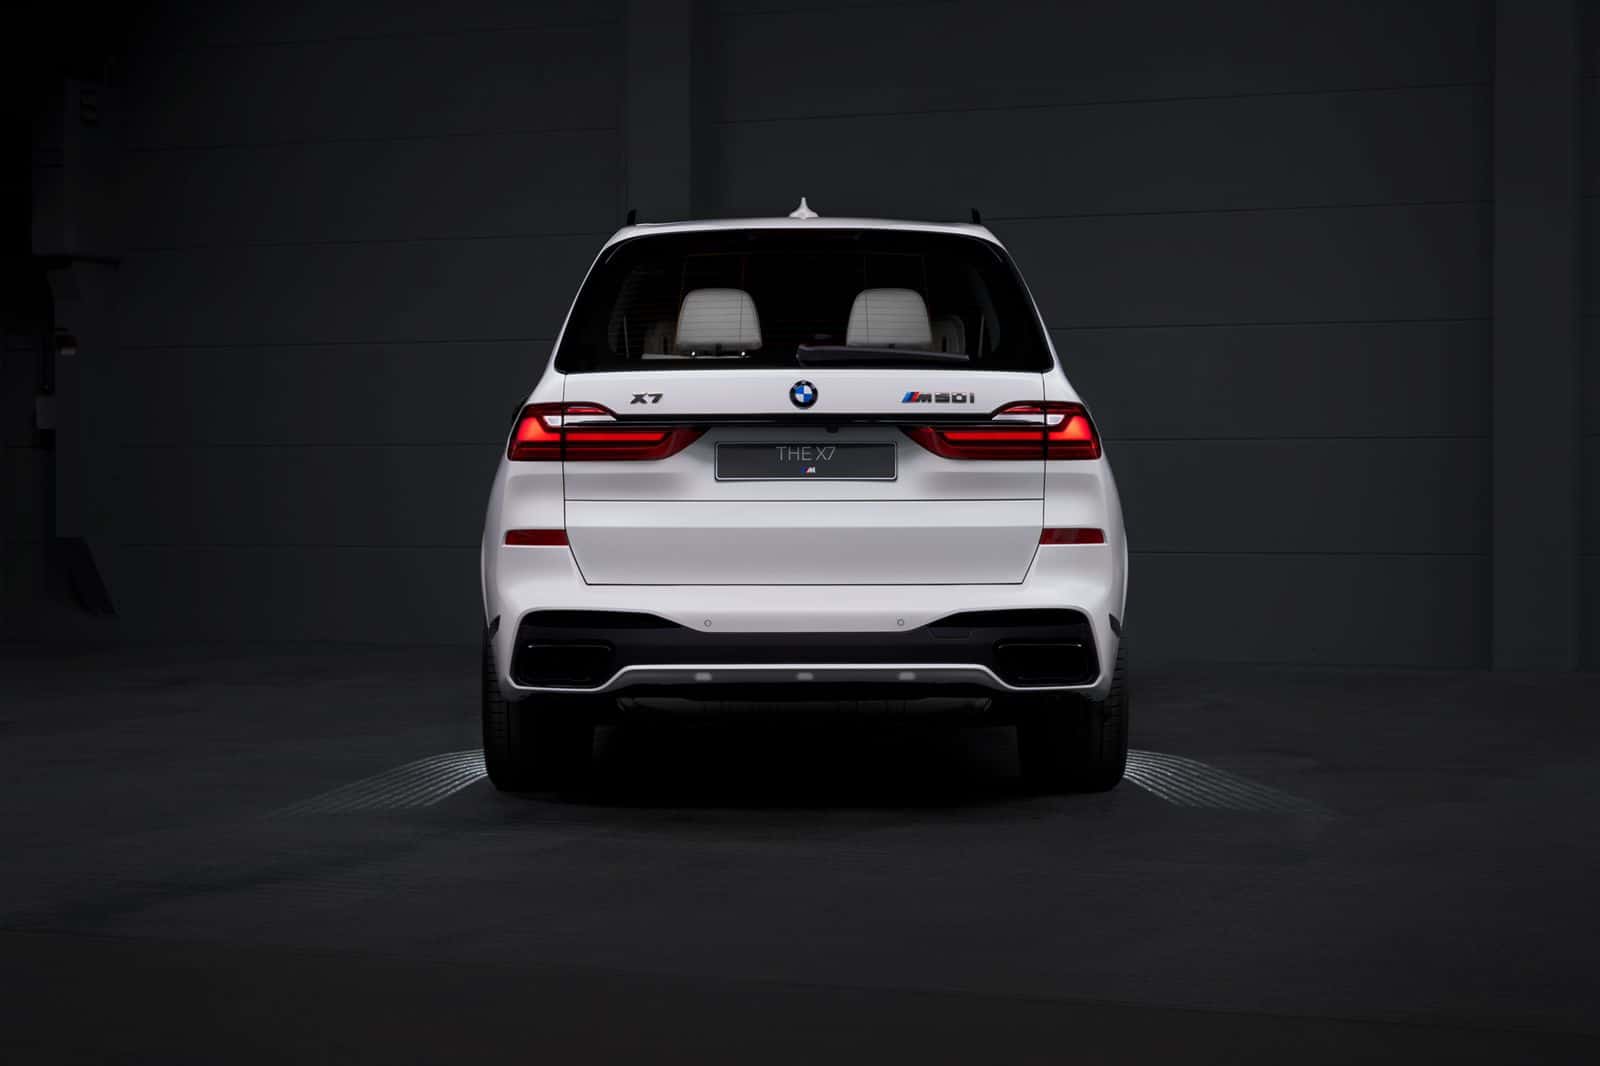 BMW විසින් එක්සත් අරාබි එමීර් රාජ්‍යය පිහිටුවීමේ පනස් වැනි සංවත්සරය වන X7, රට තුළ ස්වර්ණ ජයන්ති සැමරුම නිමිත්තෙන් ඉදිරිපත් කරයි.